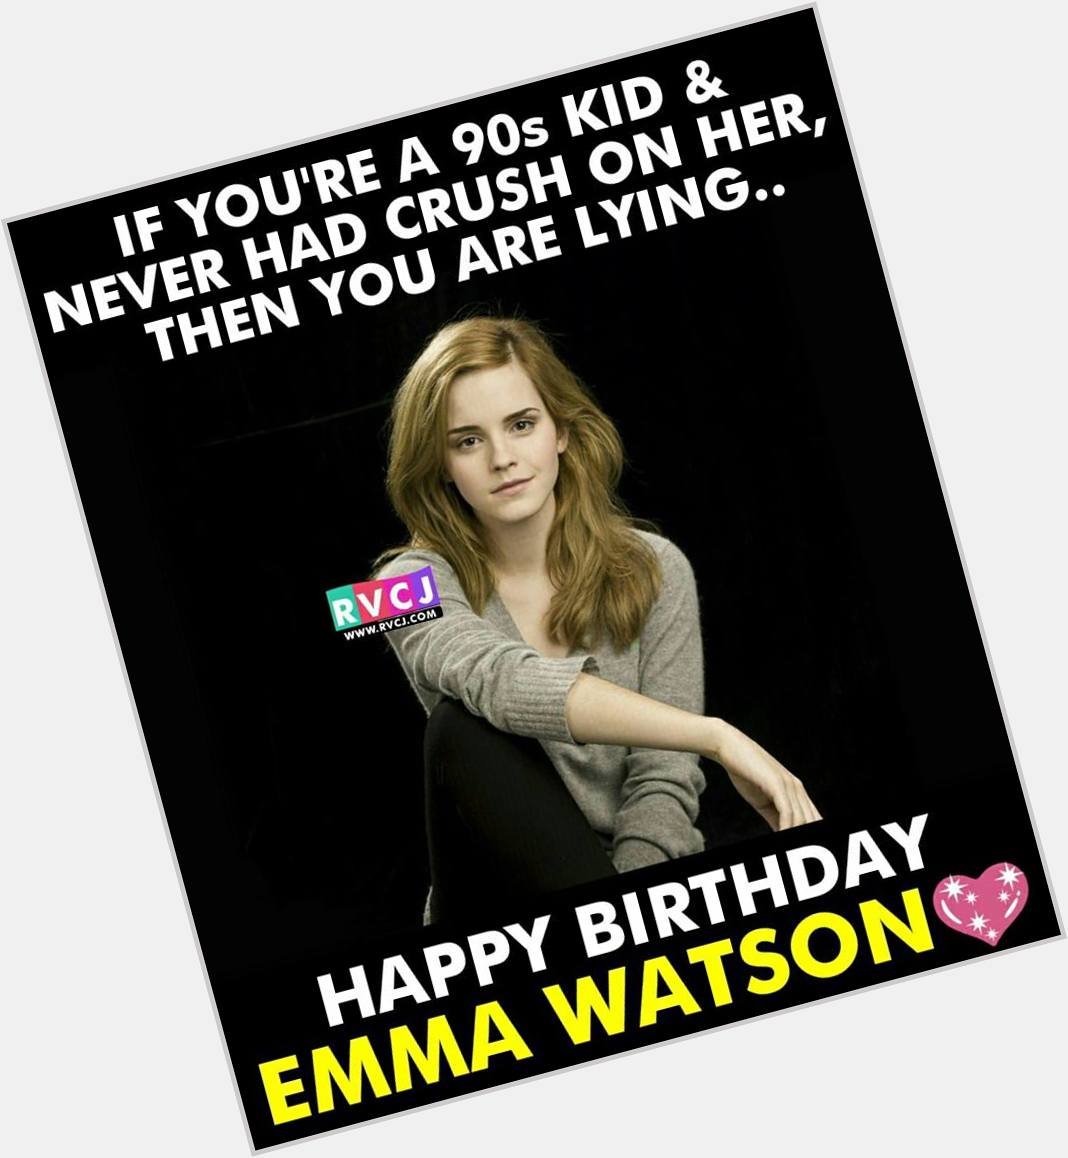 Happy Birthday Emma Watson 